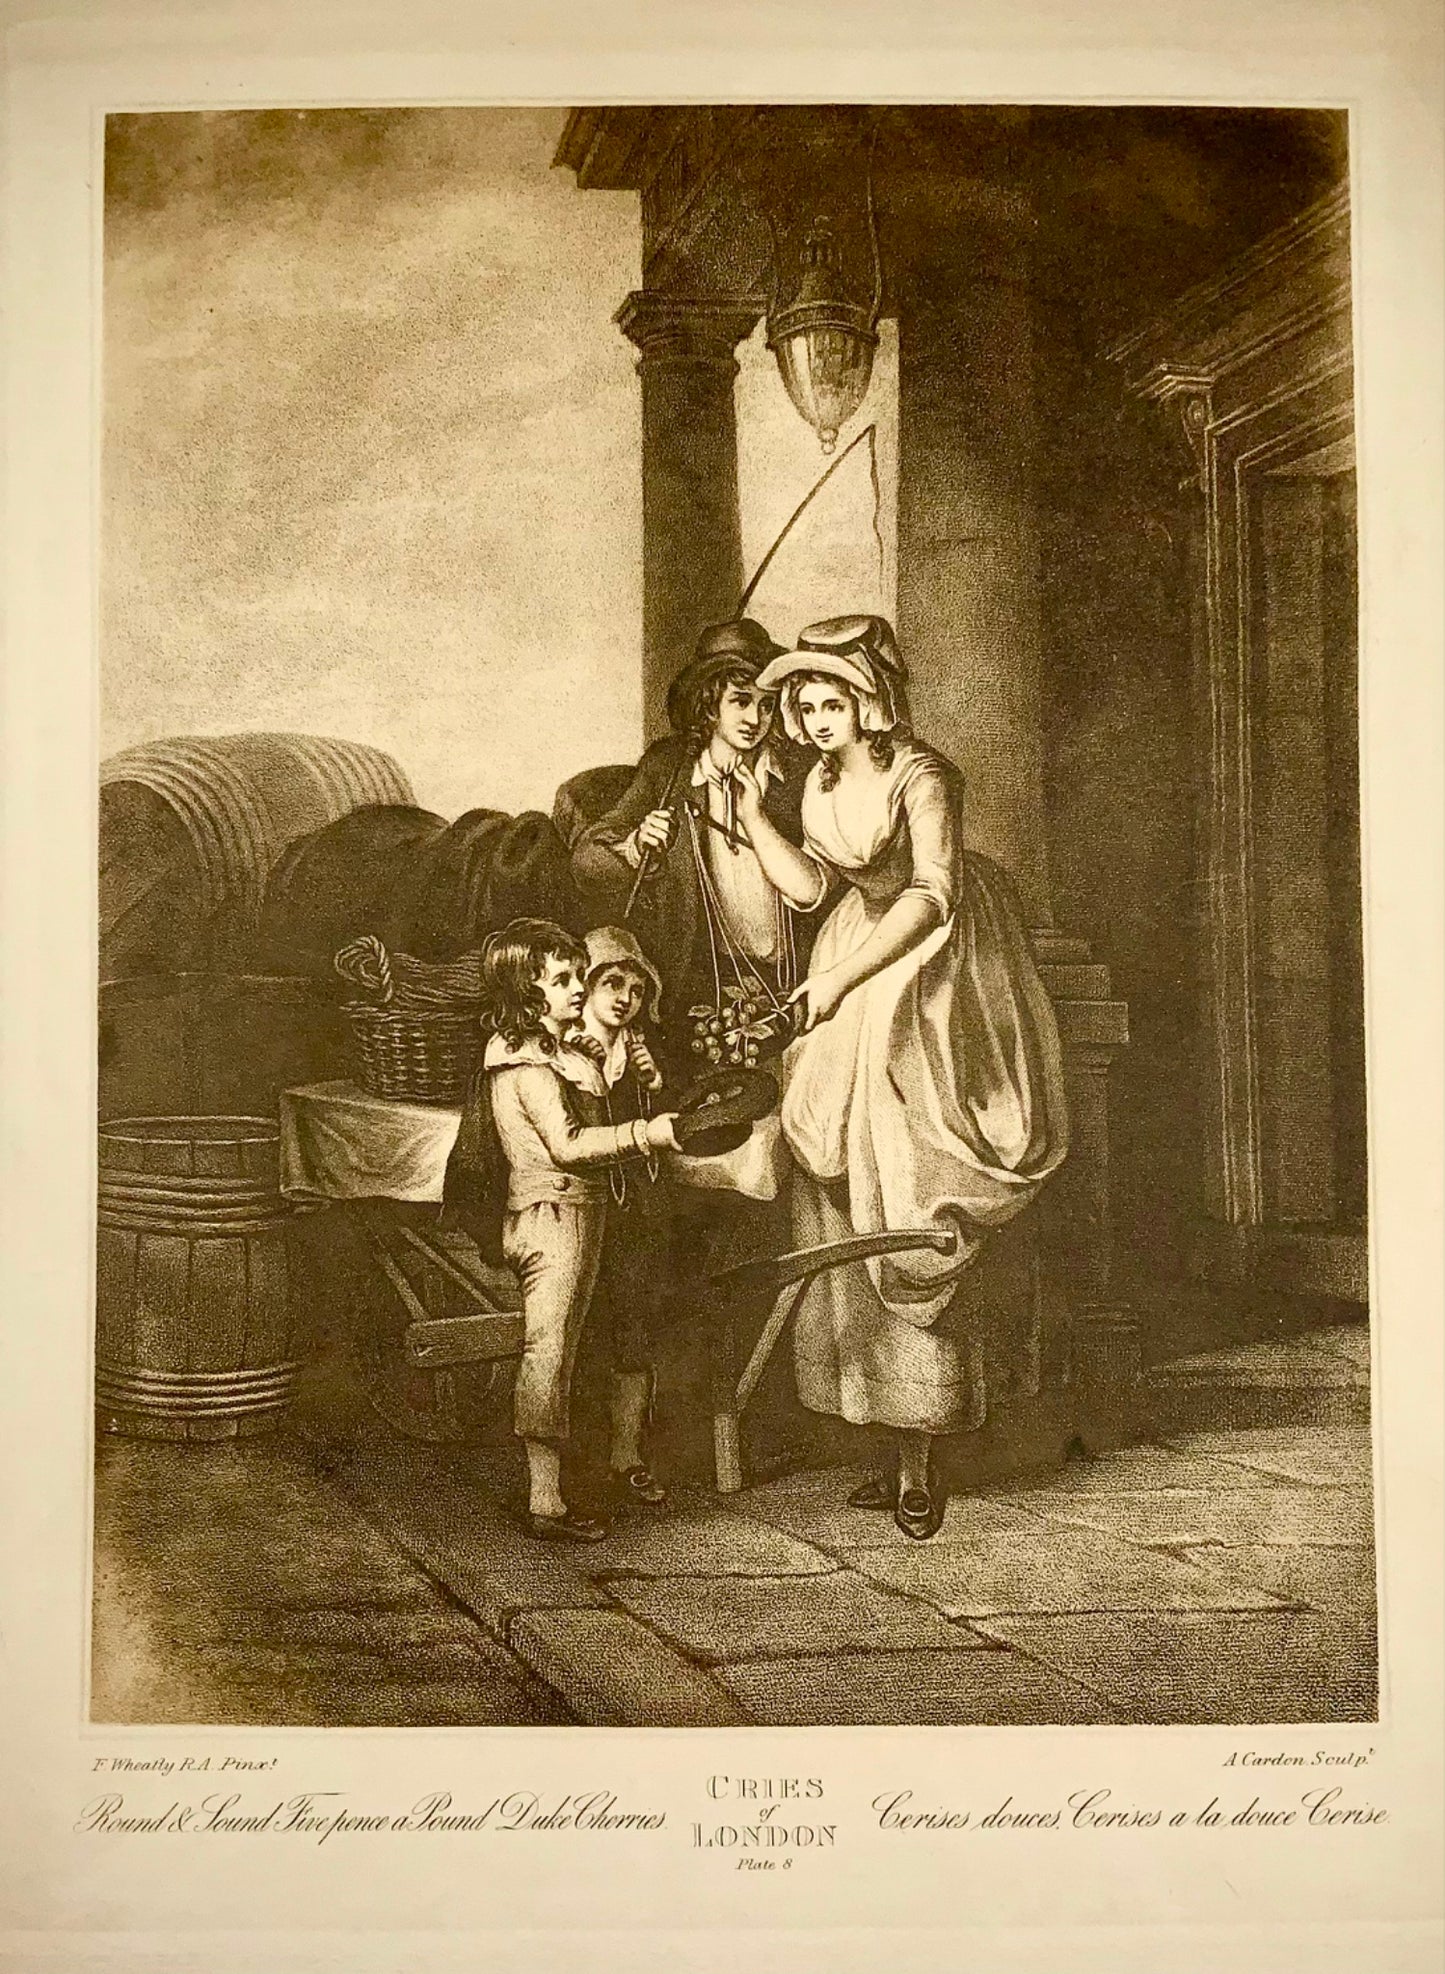 1795 Fr. Wheatley, Cries of London, Fruit Seller, grande gravure en pointillé in-folio, métiers